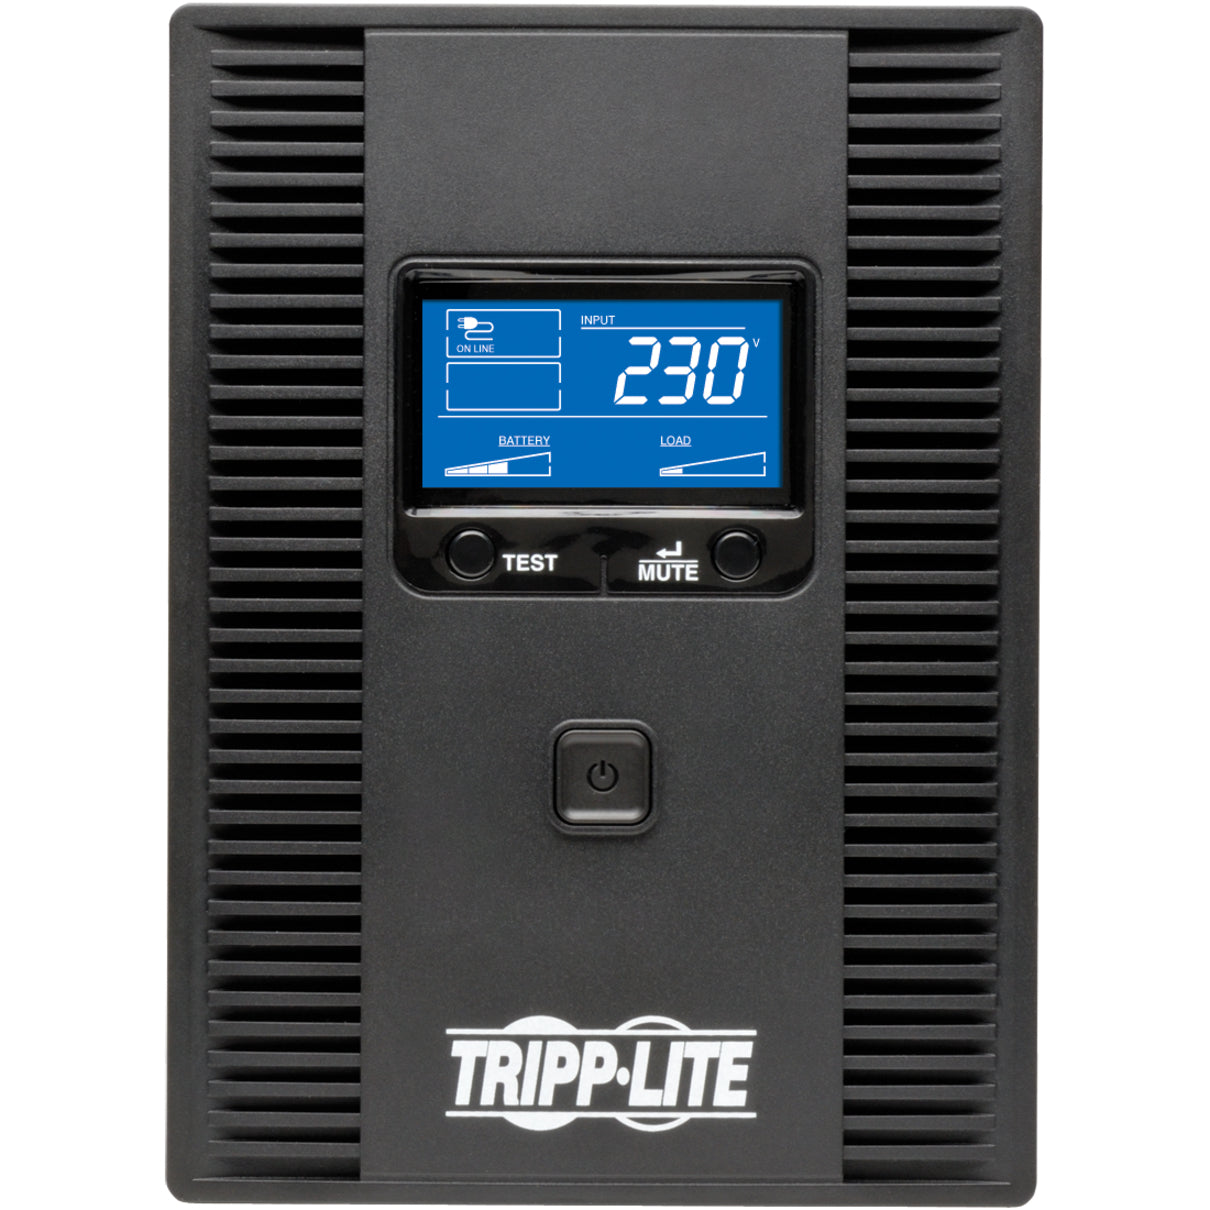 Tripp Lite SMX1500LCDT Smart LCD 1500VA Tower Line-Interactive 230V UPS, Power Failure, Low Battery, USB Port